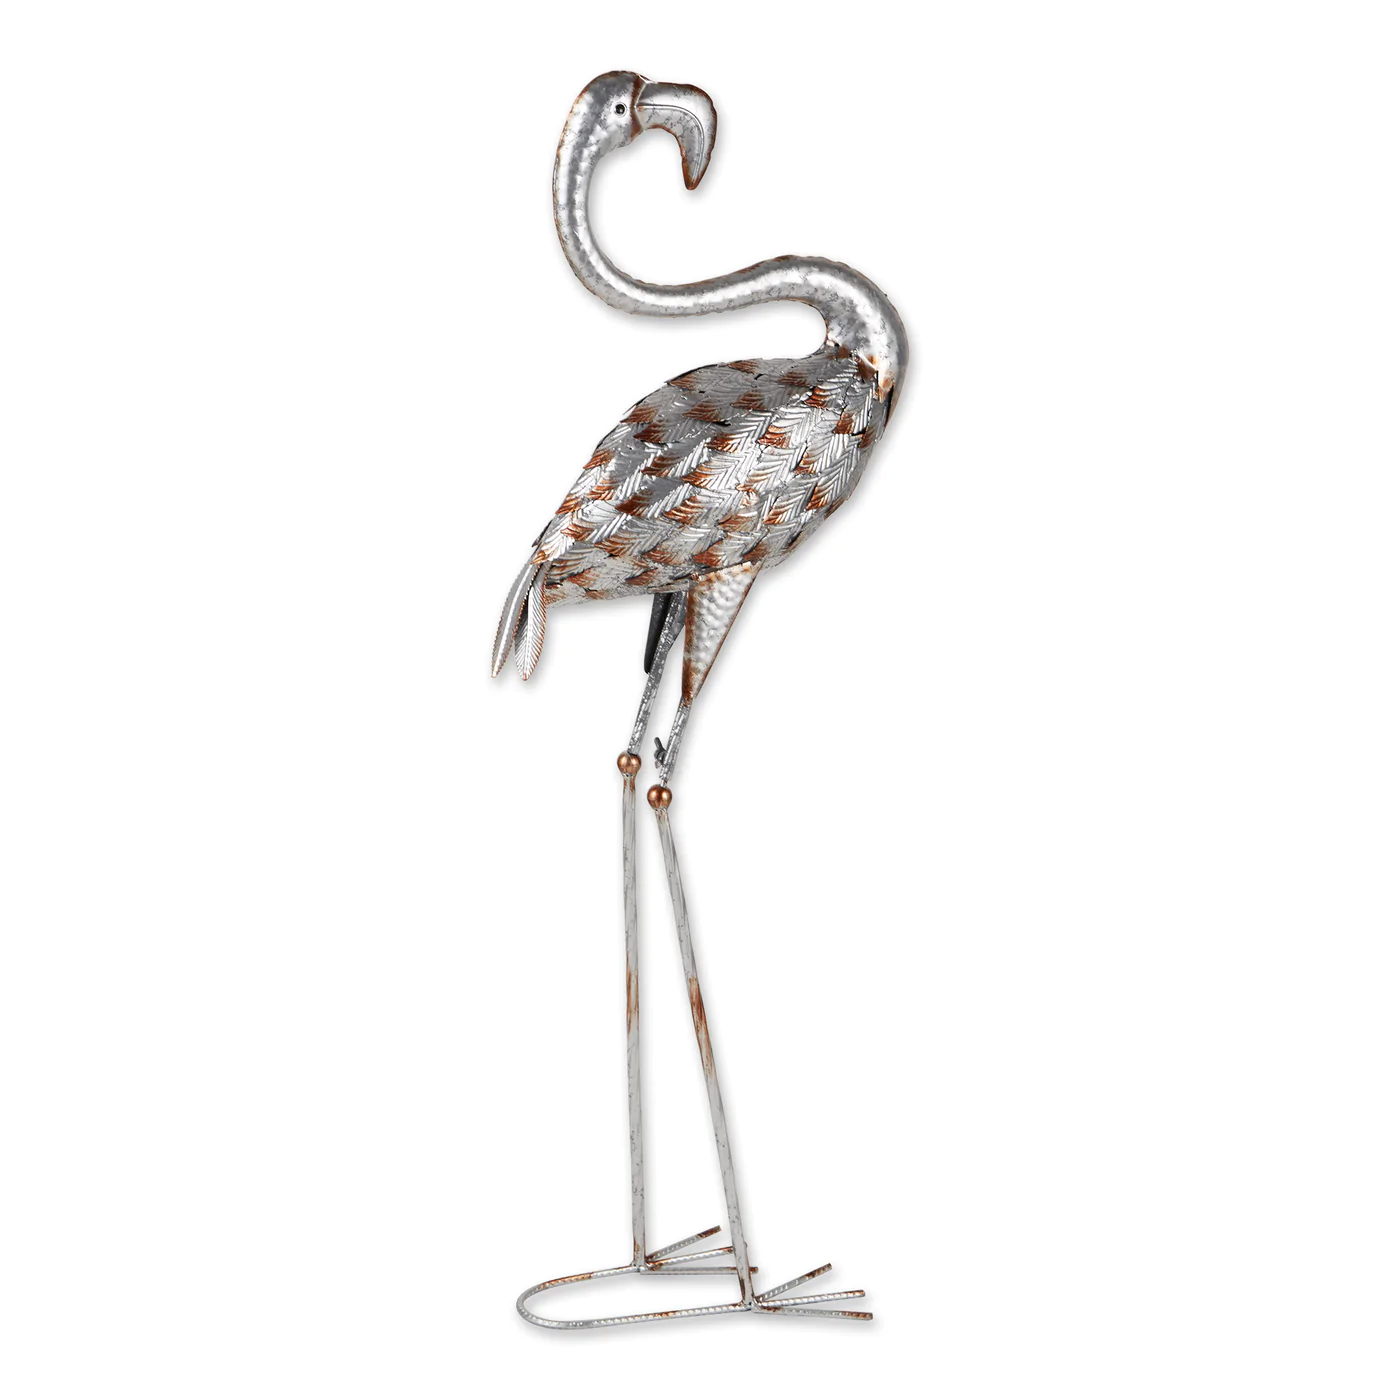  Standing Tall Galvanized Flamingo StatueT - $64.44